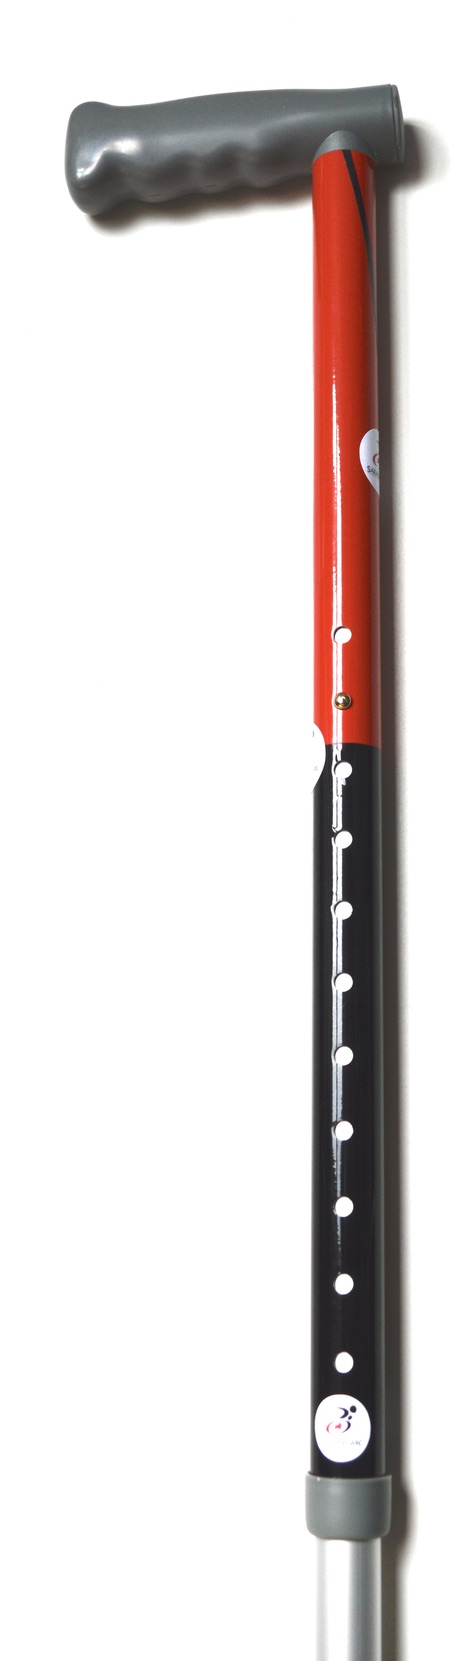 Saracens Custom Football Cane Walking Stick from Pimp Mobility